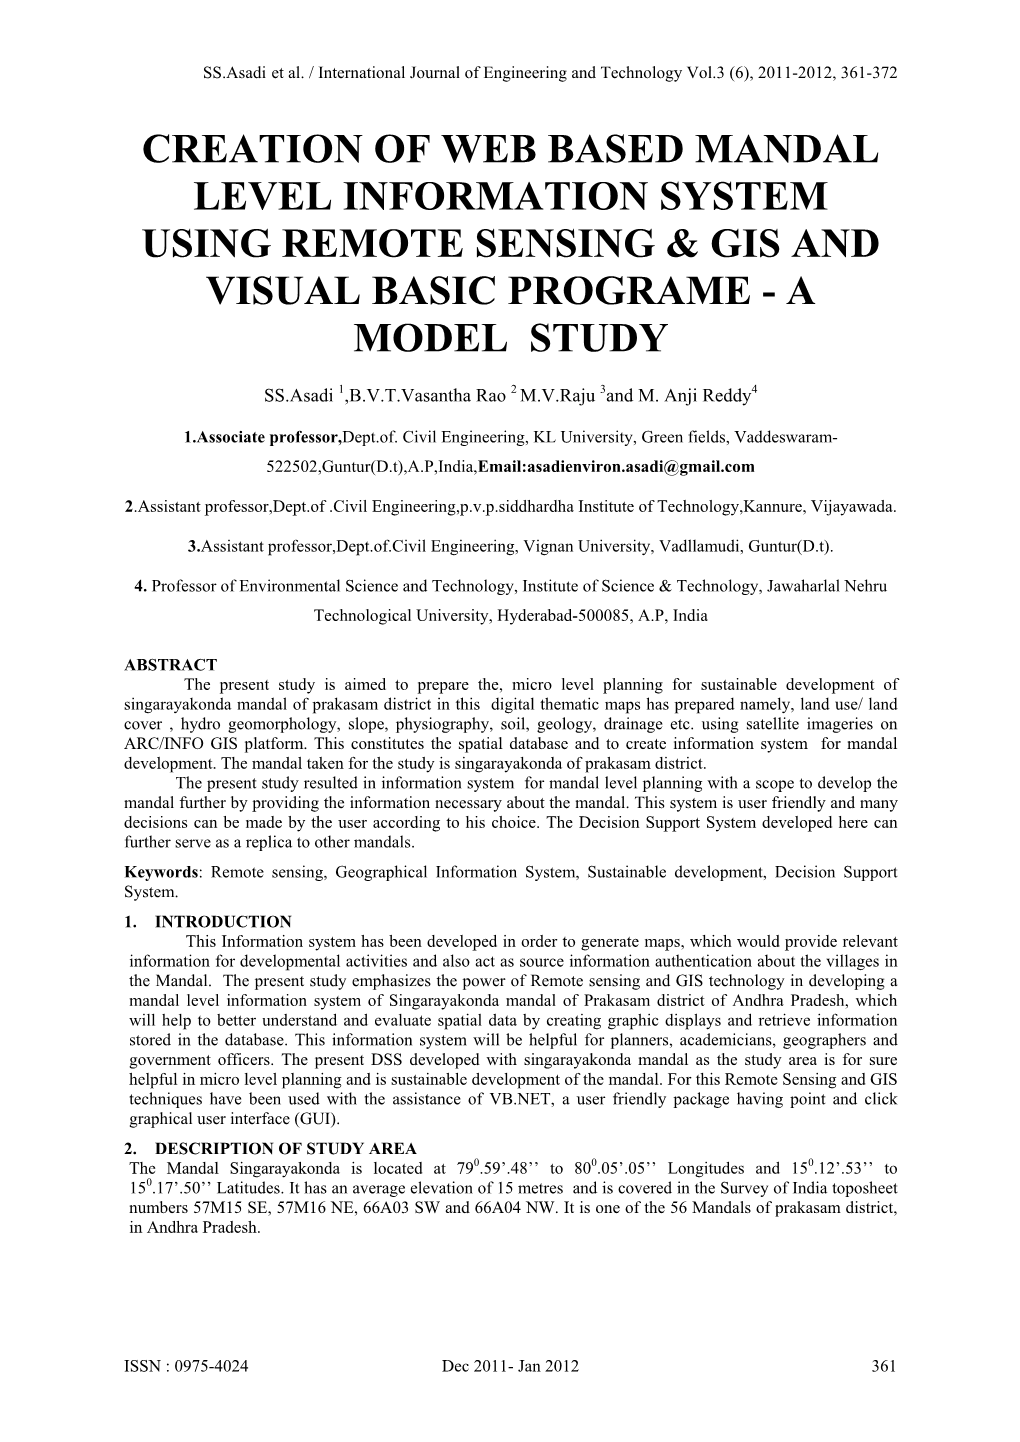 Creation of Web Based Mandal Level Information System Using Remote Sensing & Gis and Visual Basic Programe